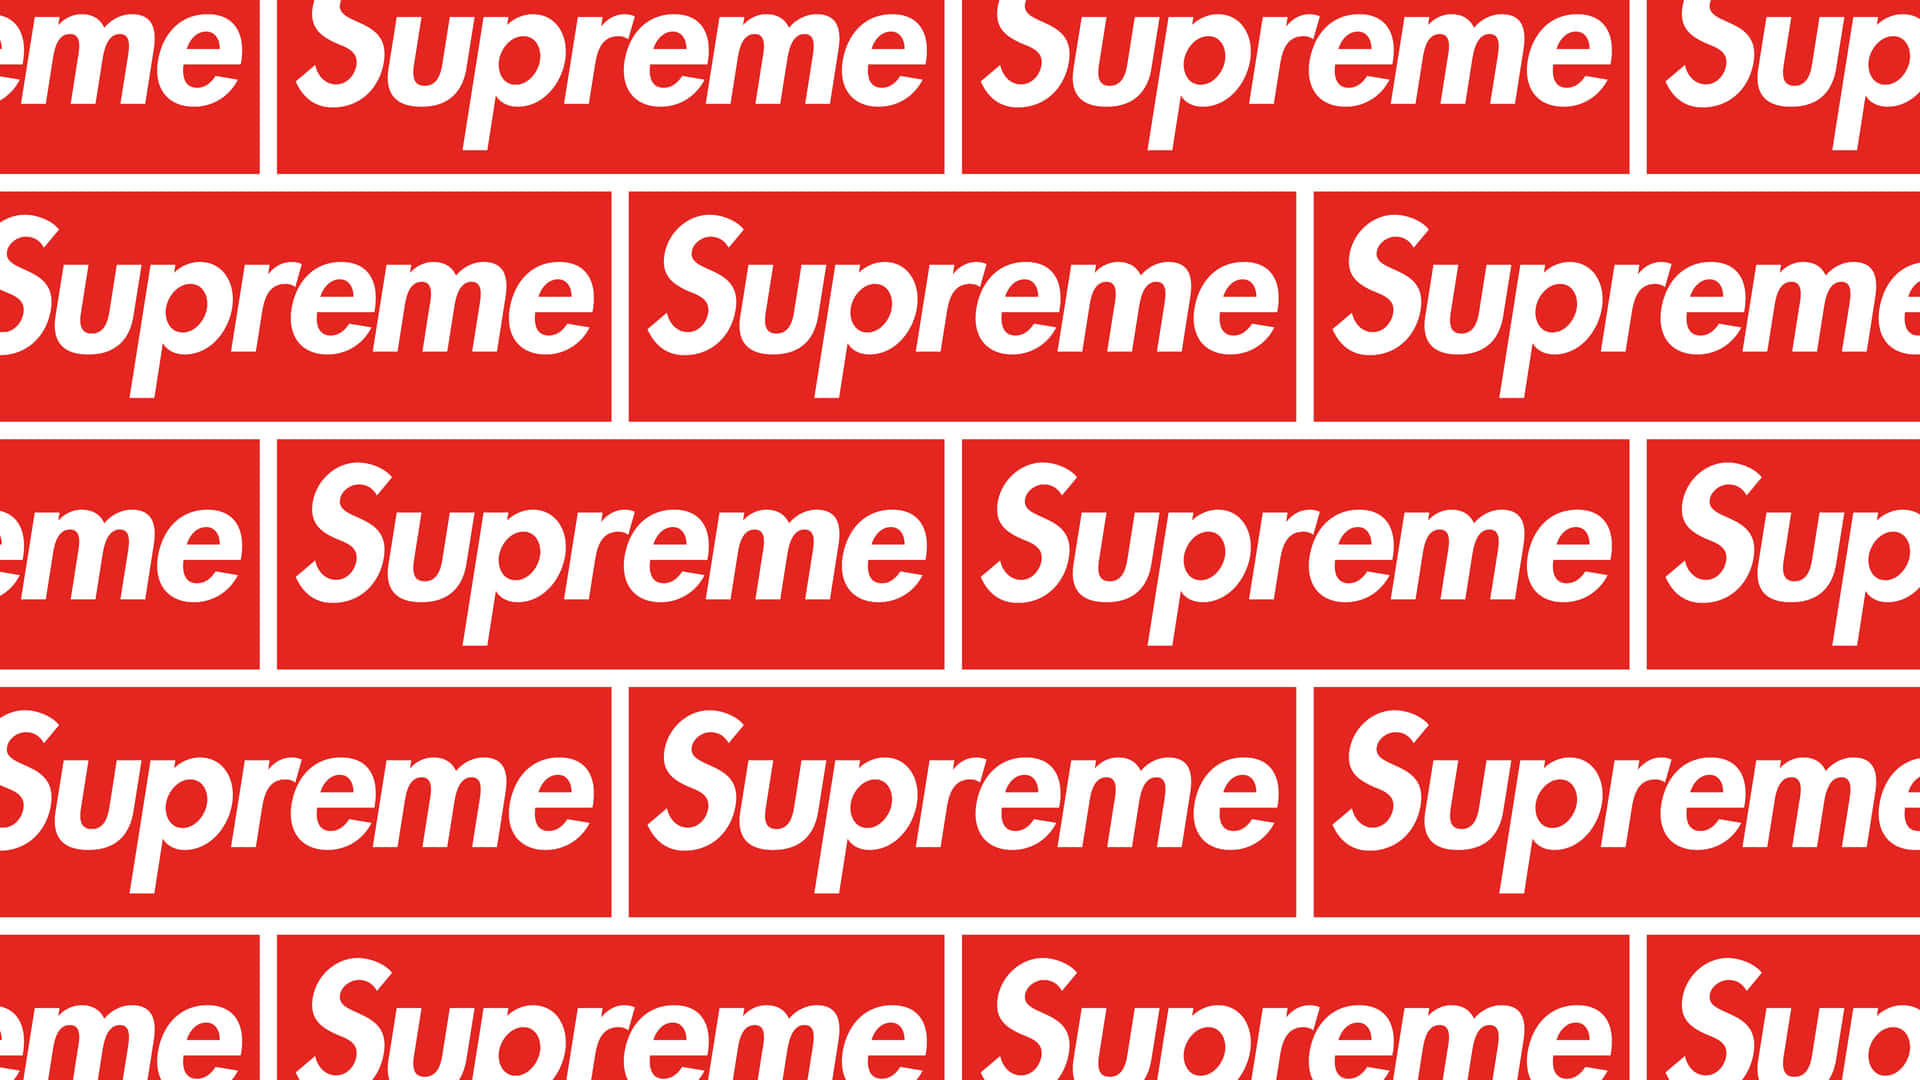 Sup - Supreme Logo Poster  Supreme logo, ? logo, Poster